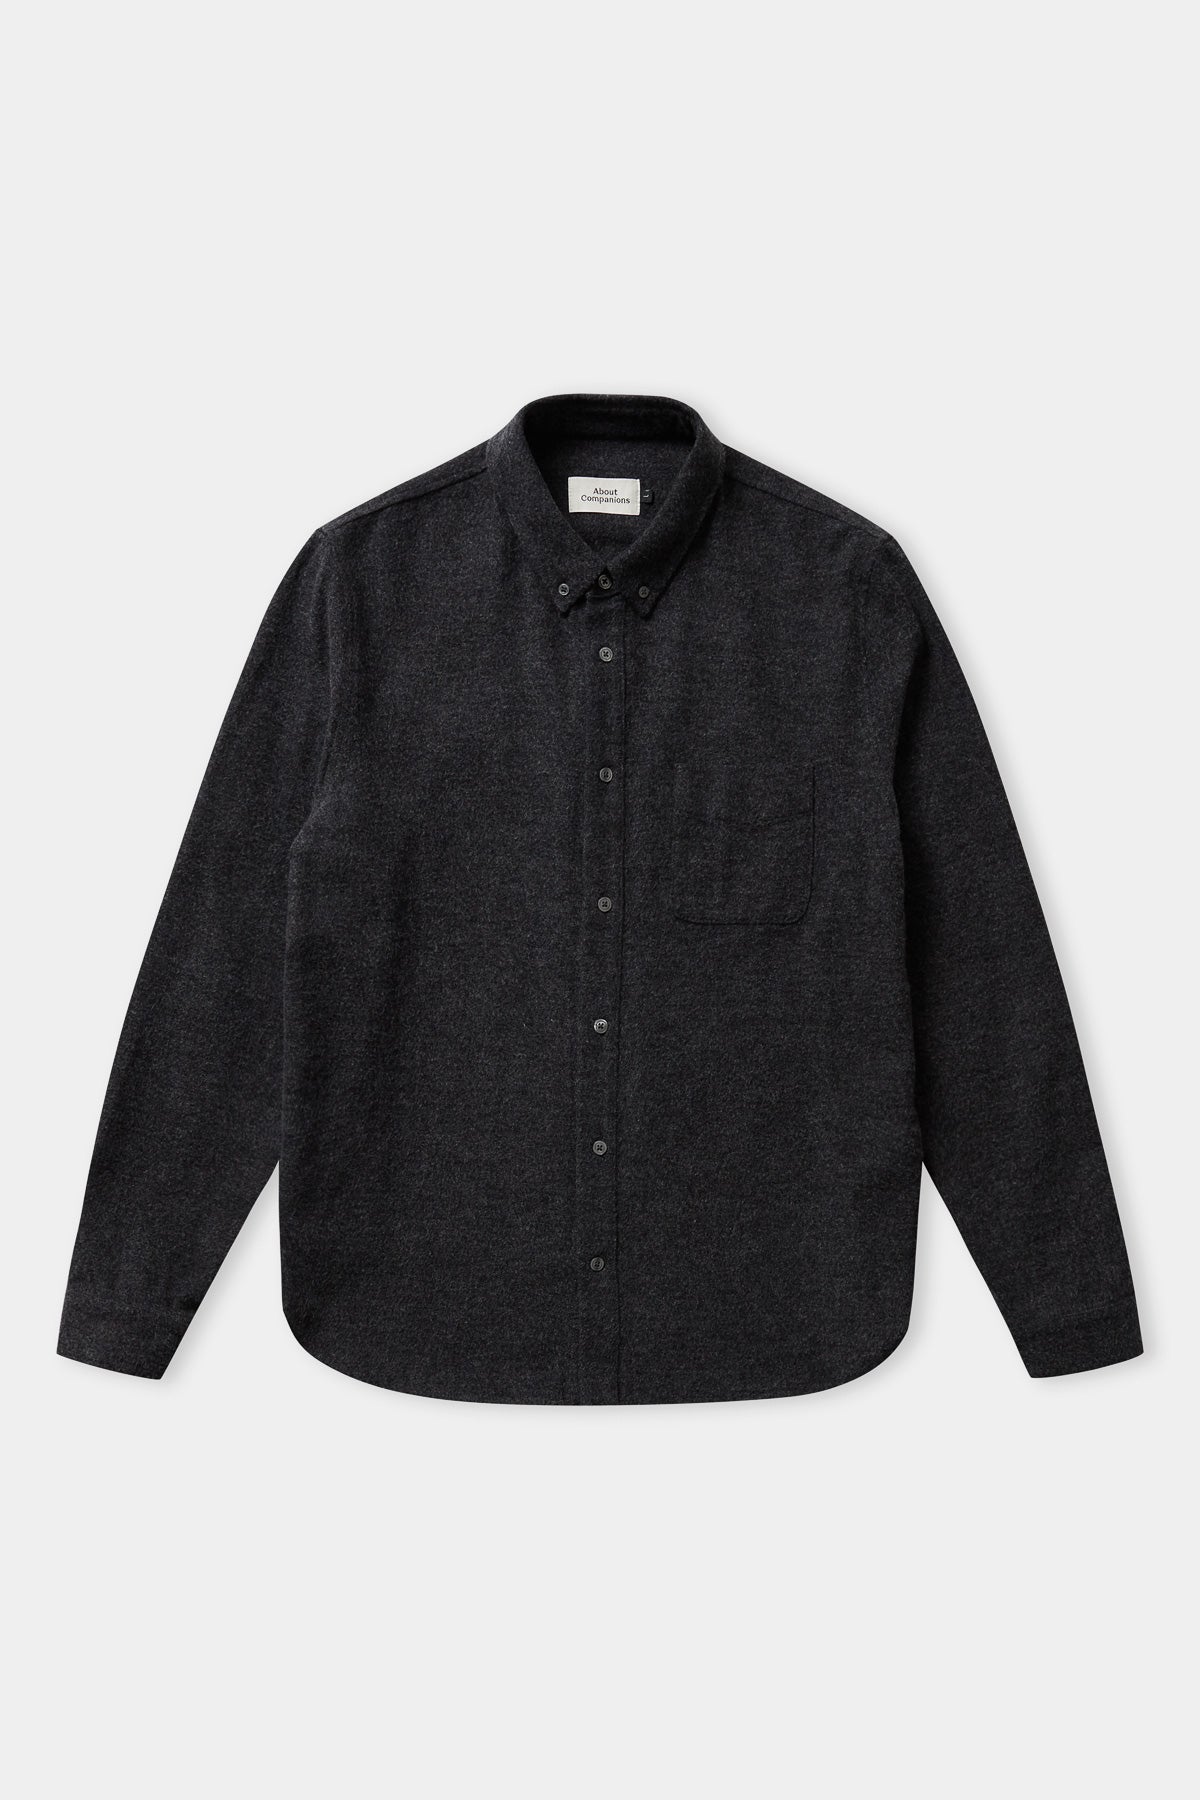 KEN shirt eco coal flannel